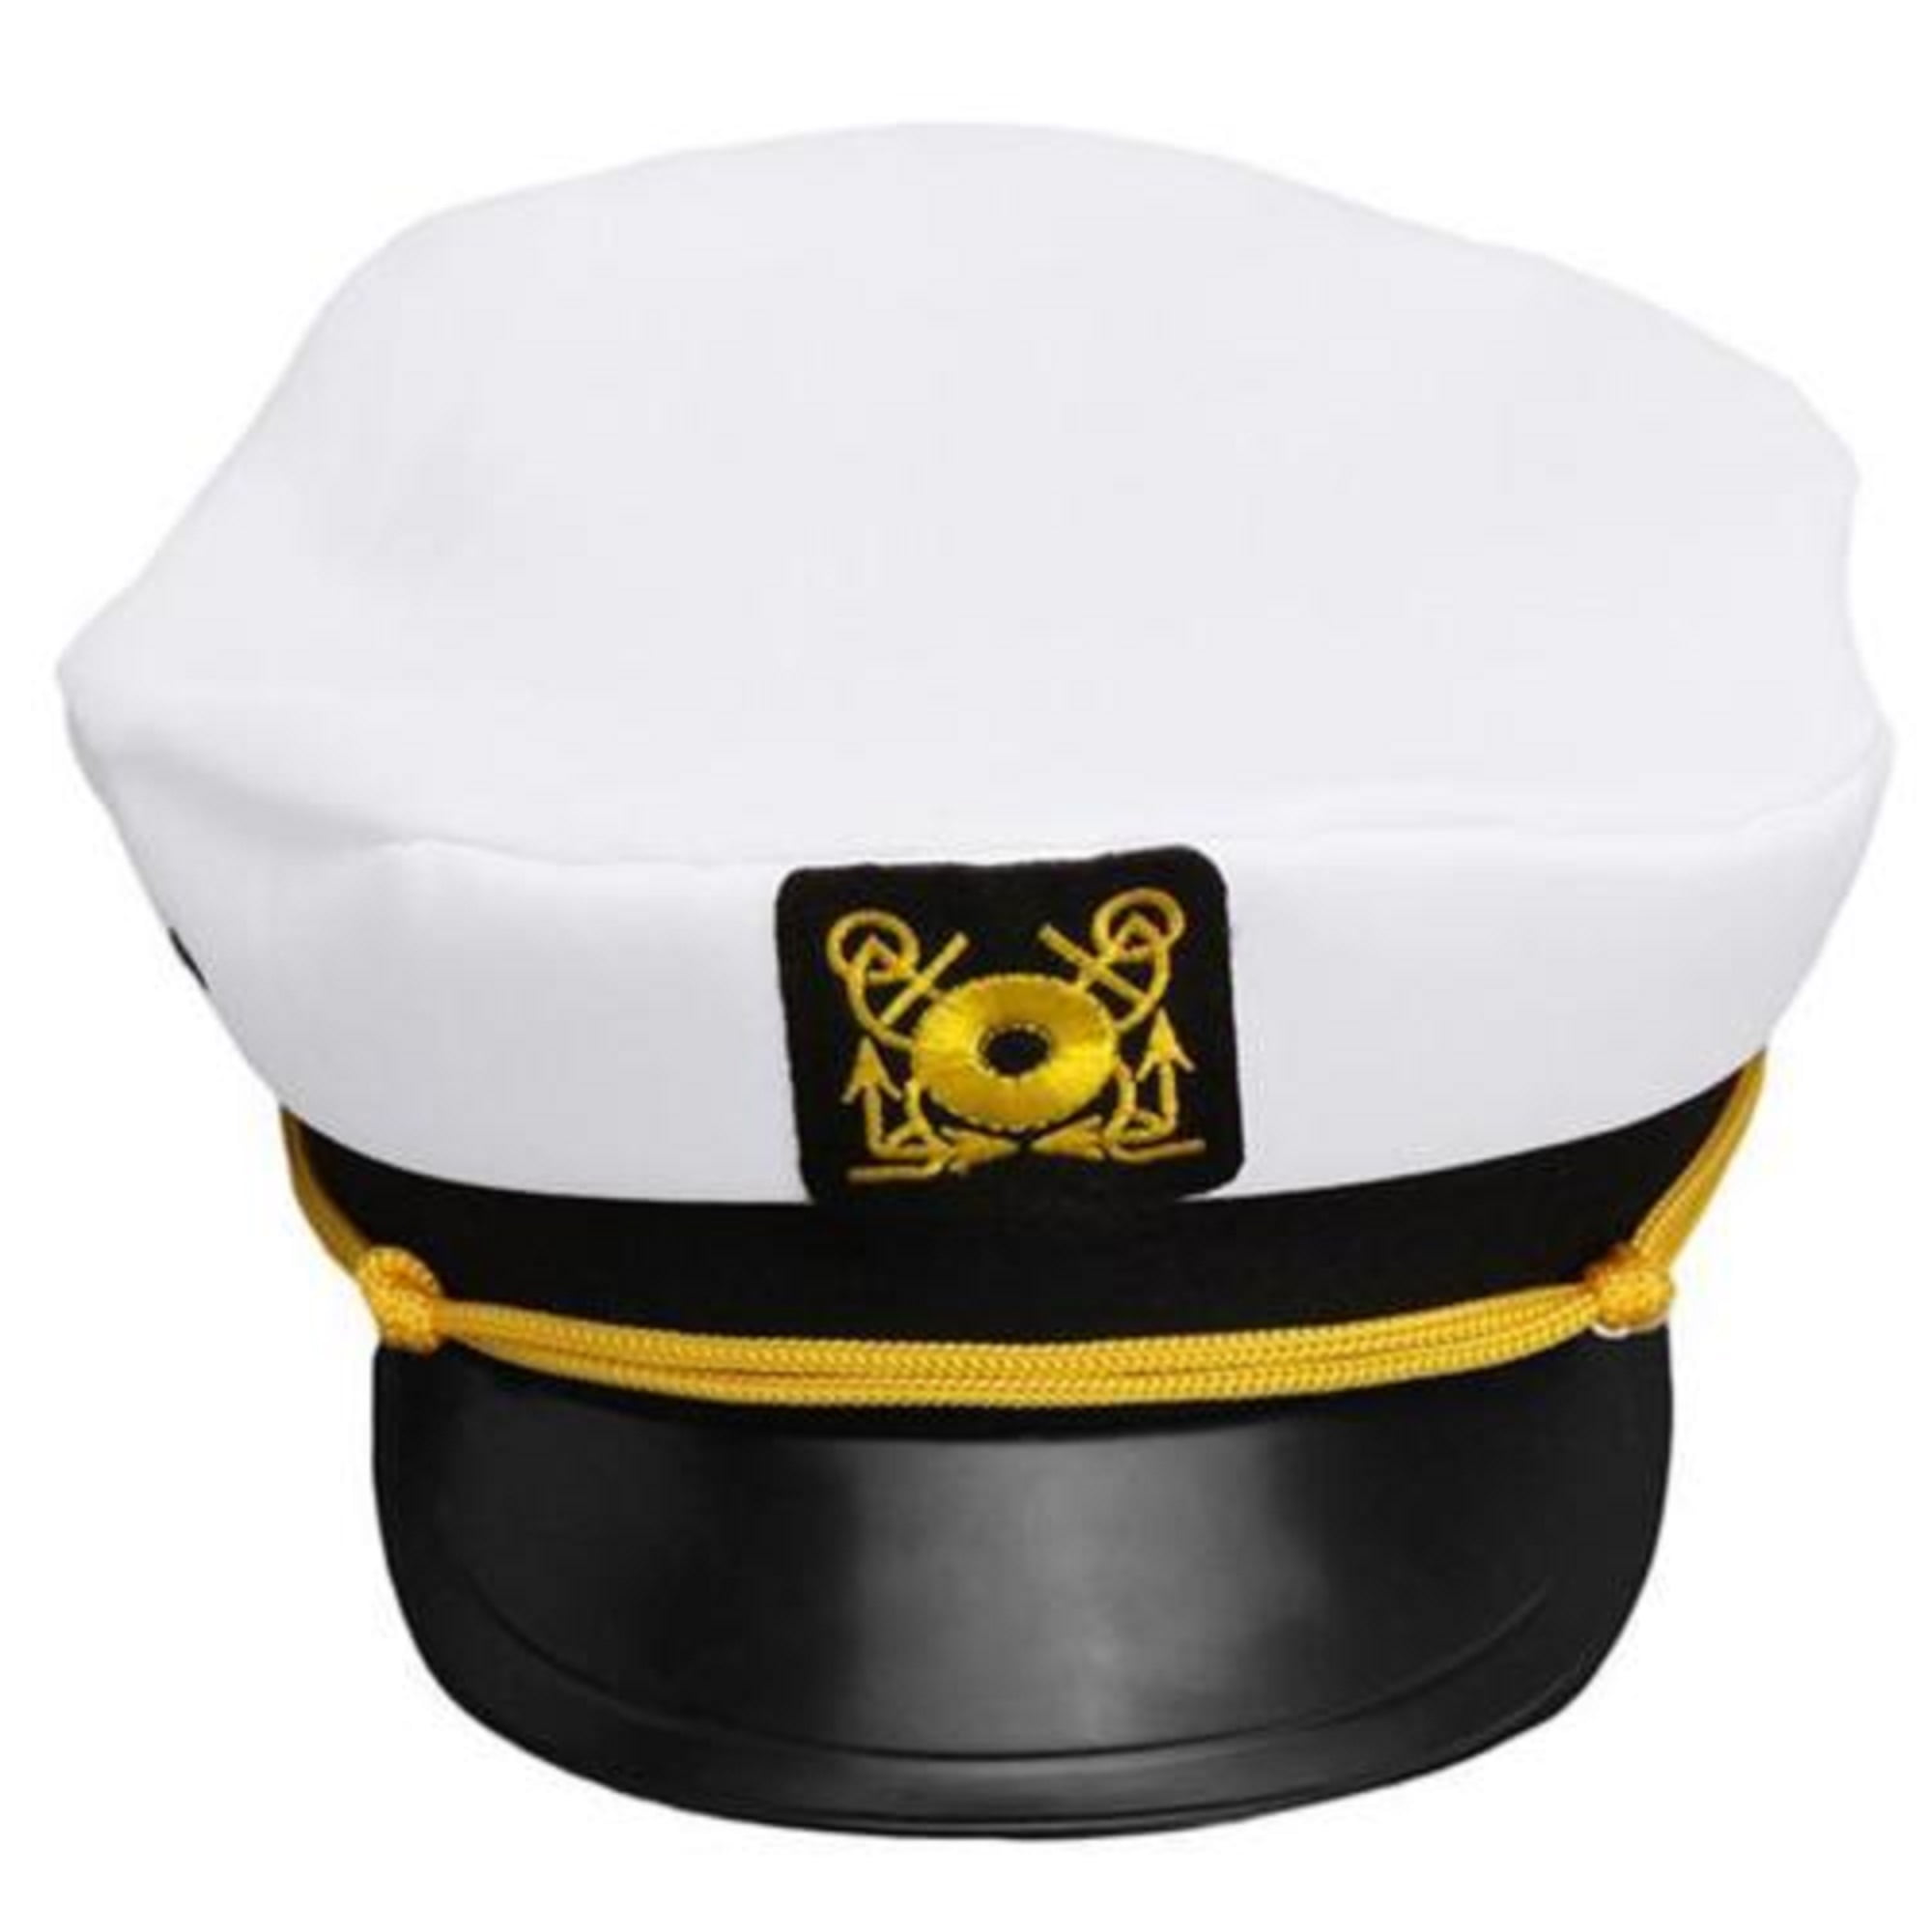 Captain Cap Embroidery, Skipper Custom Baseball Cap, Customize Your  Captains hat, Embroidered Captain Boat dad hat,Baseball Cap Navy at   Men's Clothing store